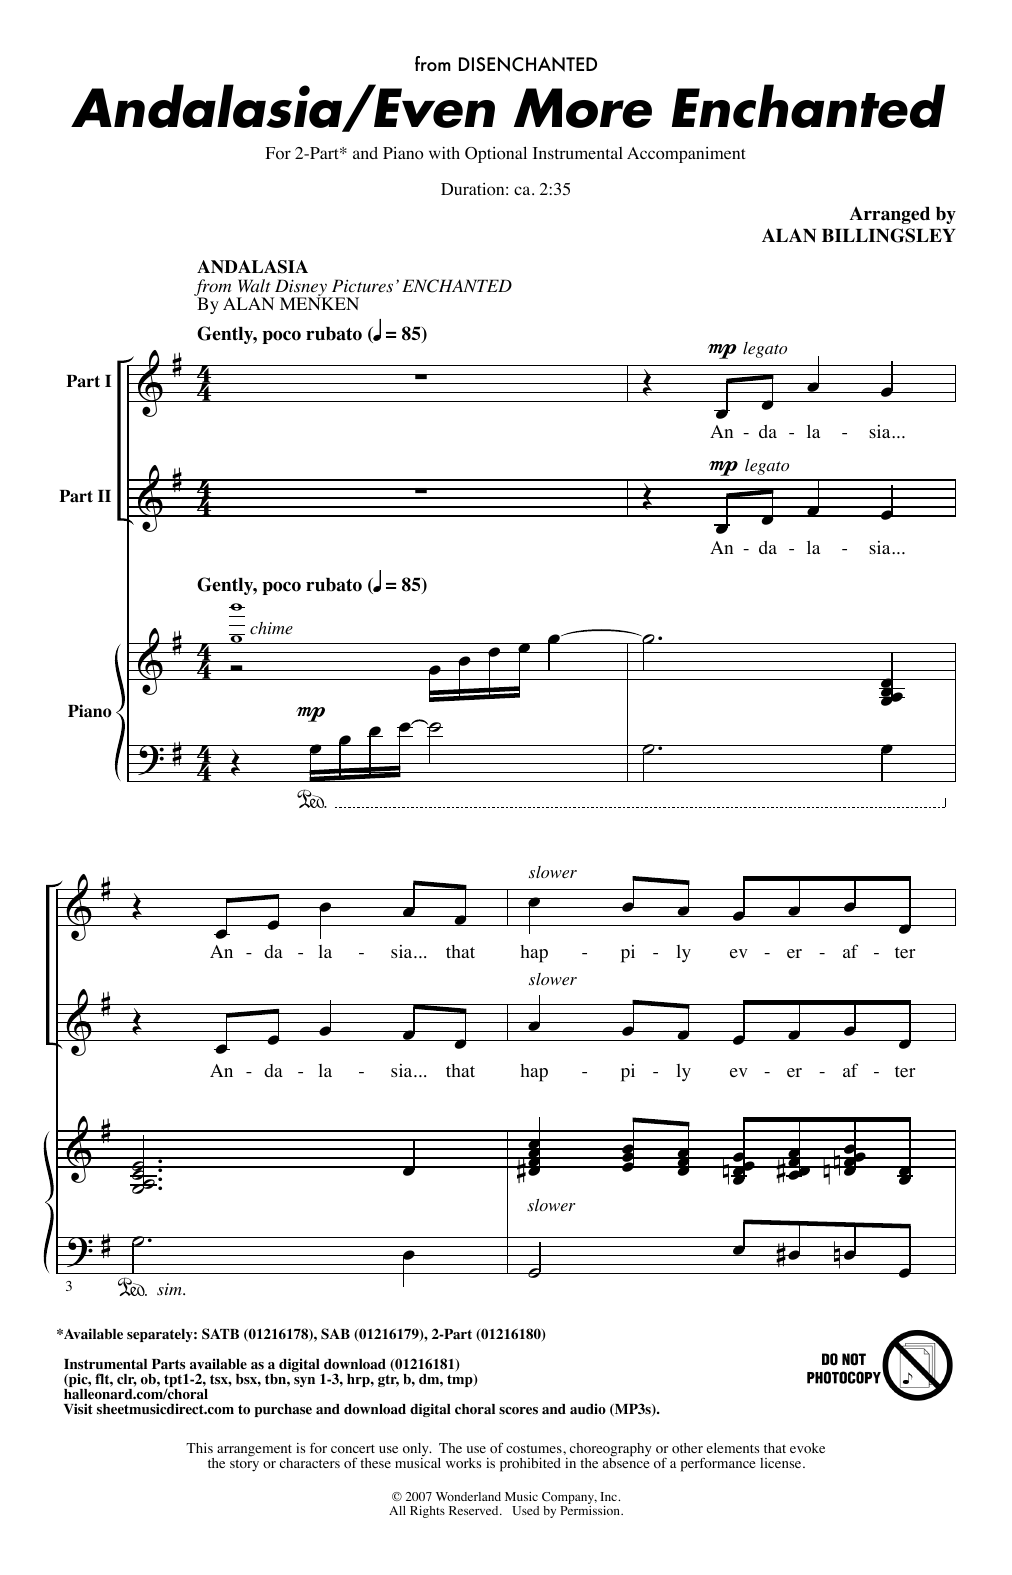 Alan Menken Andalasia / Even More Enchanted (arr. Alan Billingsley) Sheet Music Notes & Chords for SATB Choir - Download or Print PDF